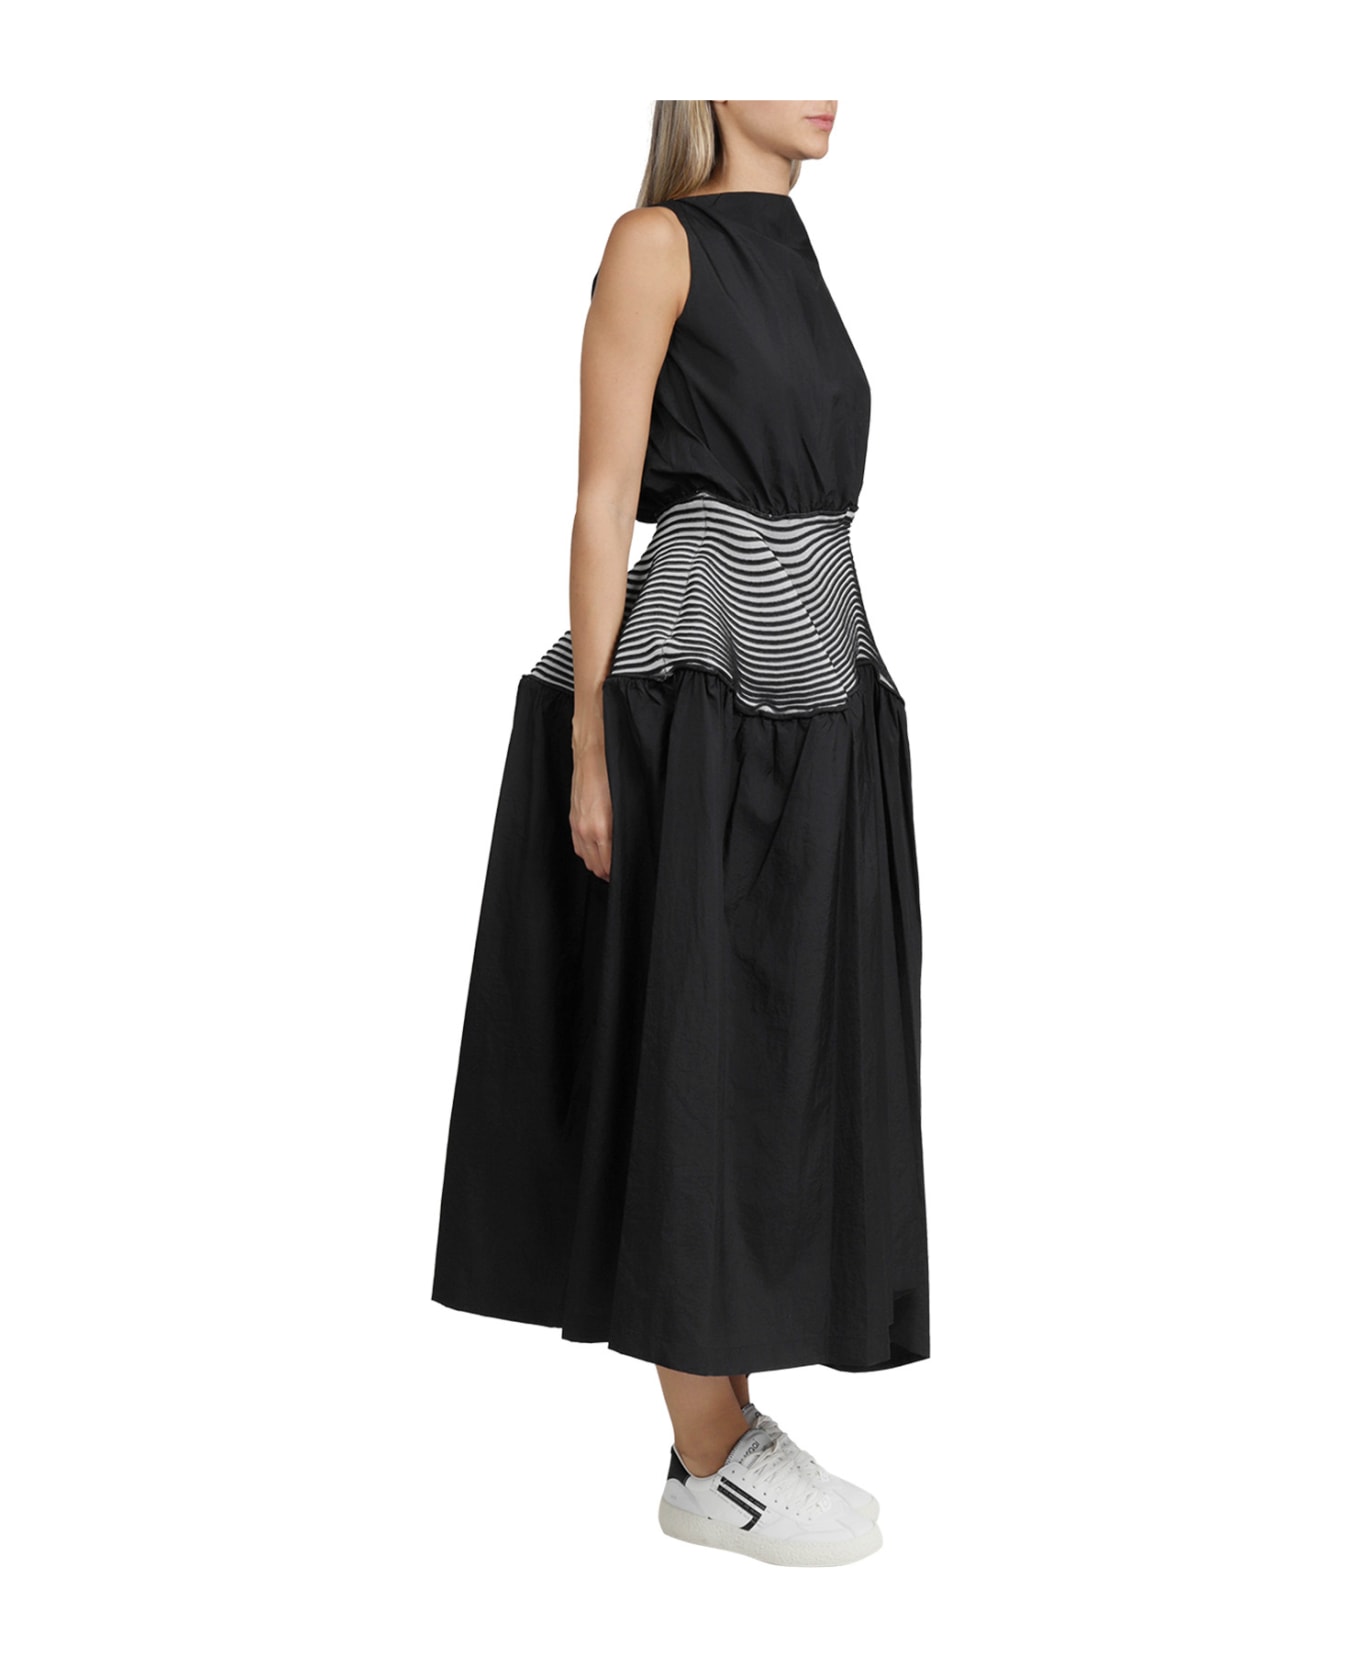 Issey Miyake Winding Solid Black Dress - Black